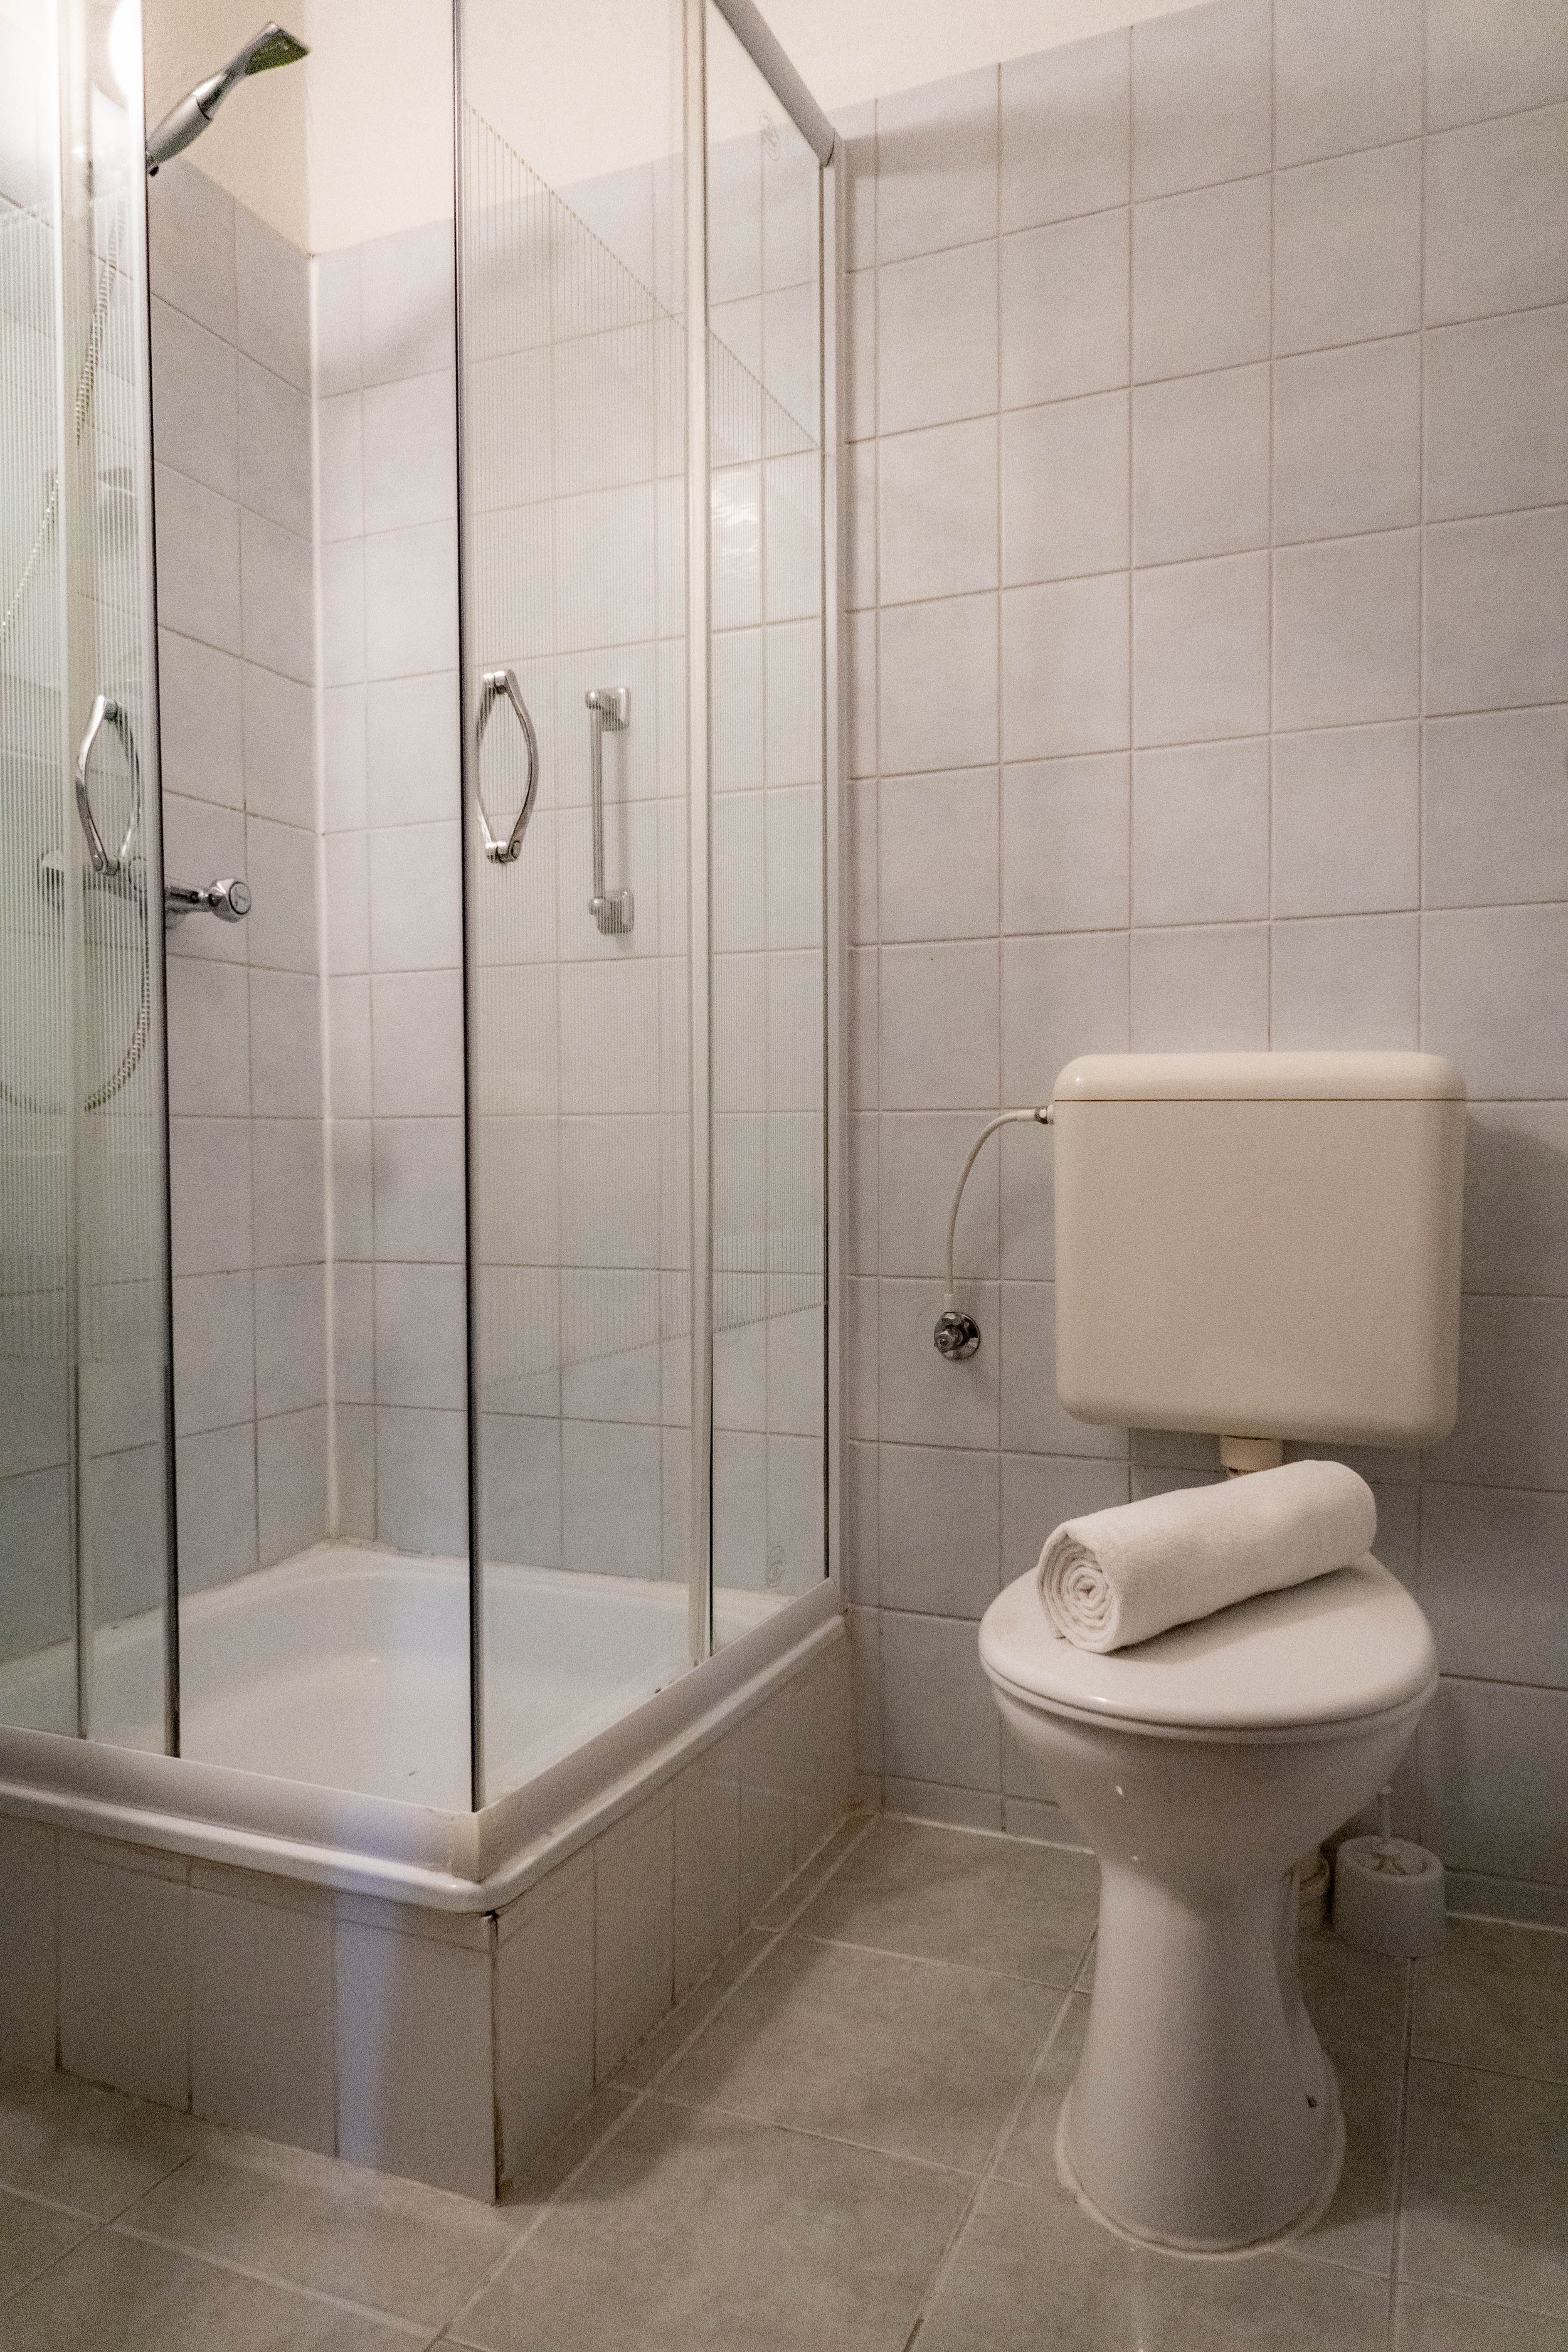 Equity Point Budapest Private Room Bathroom Shower 2.jpg